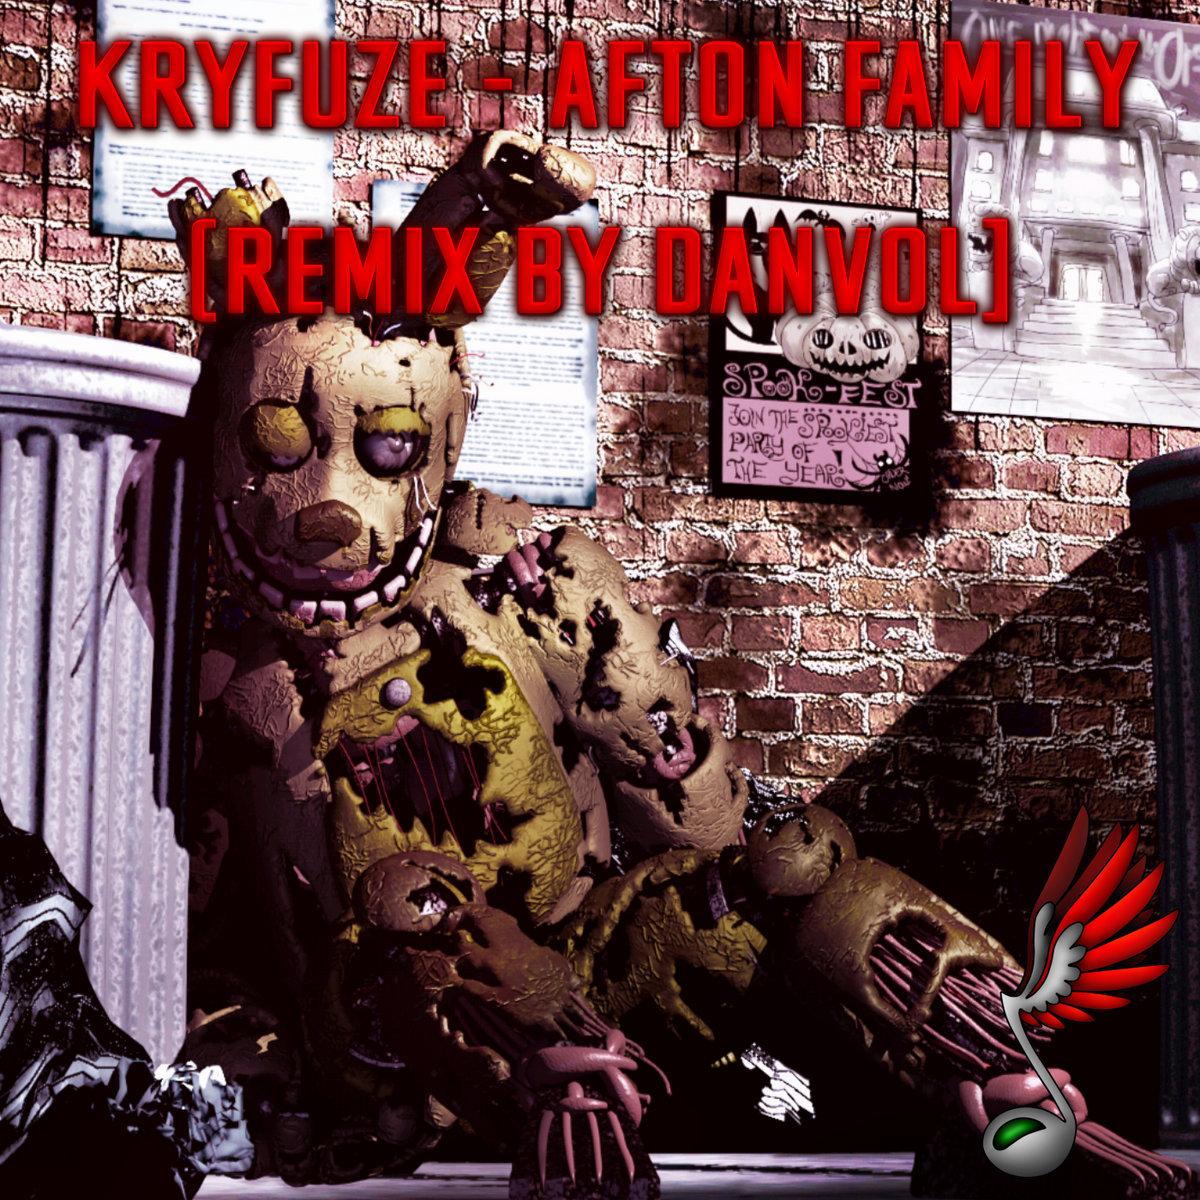 Kryfuze Afton Family Remix Danvol